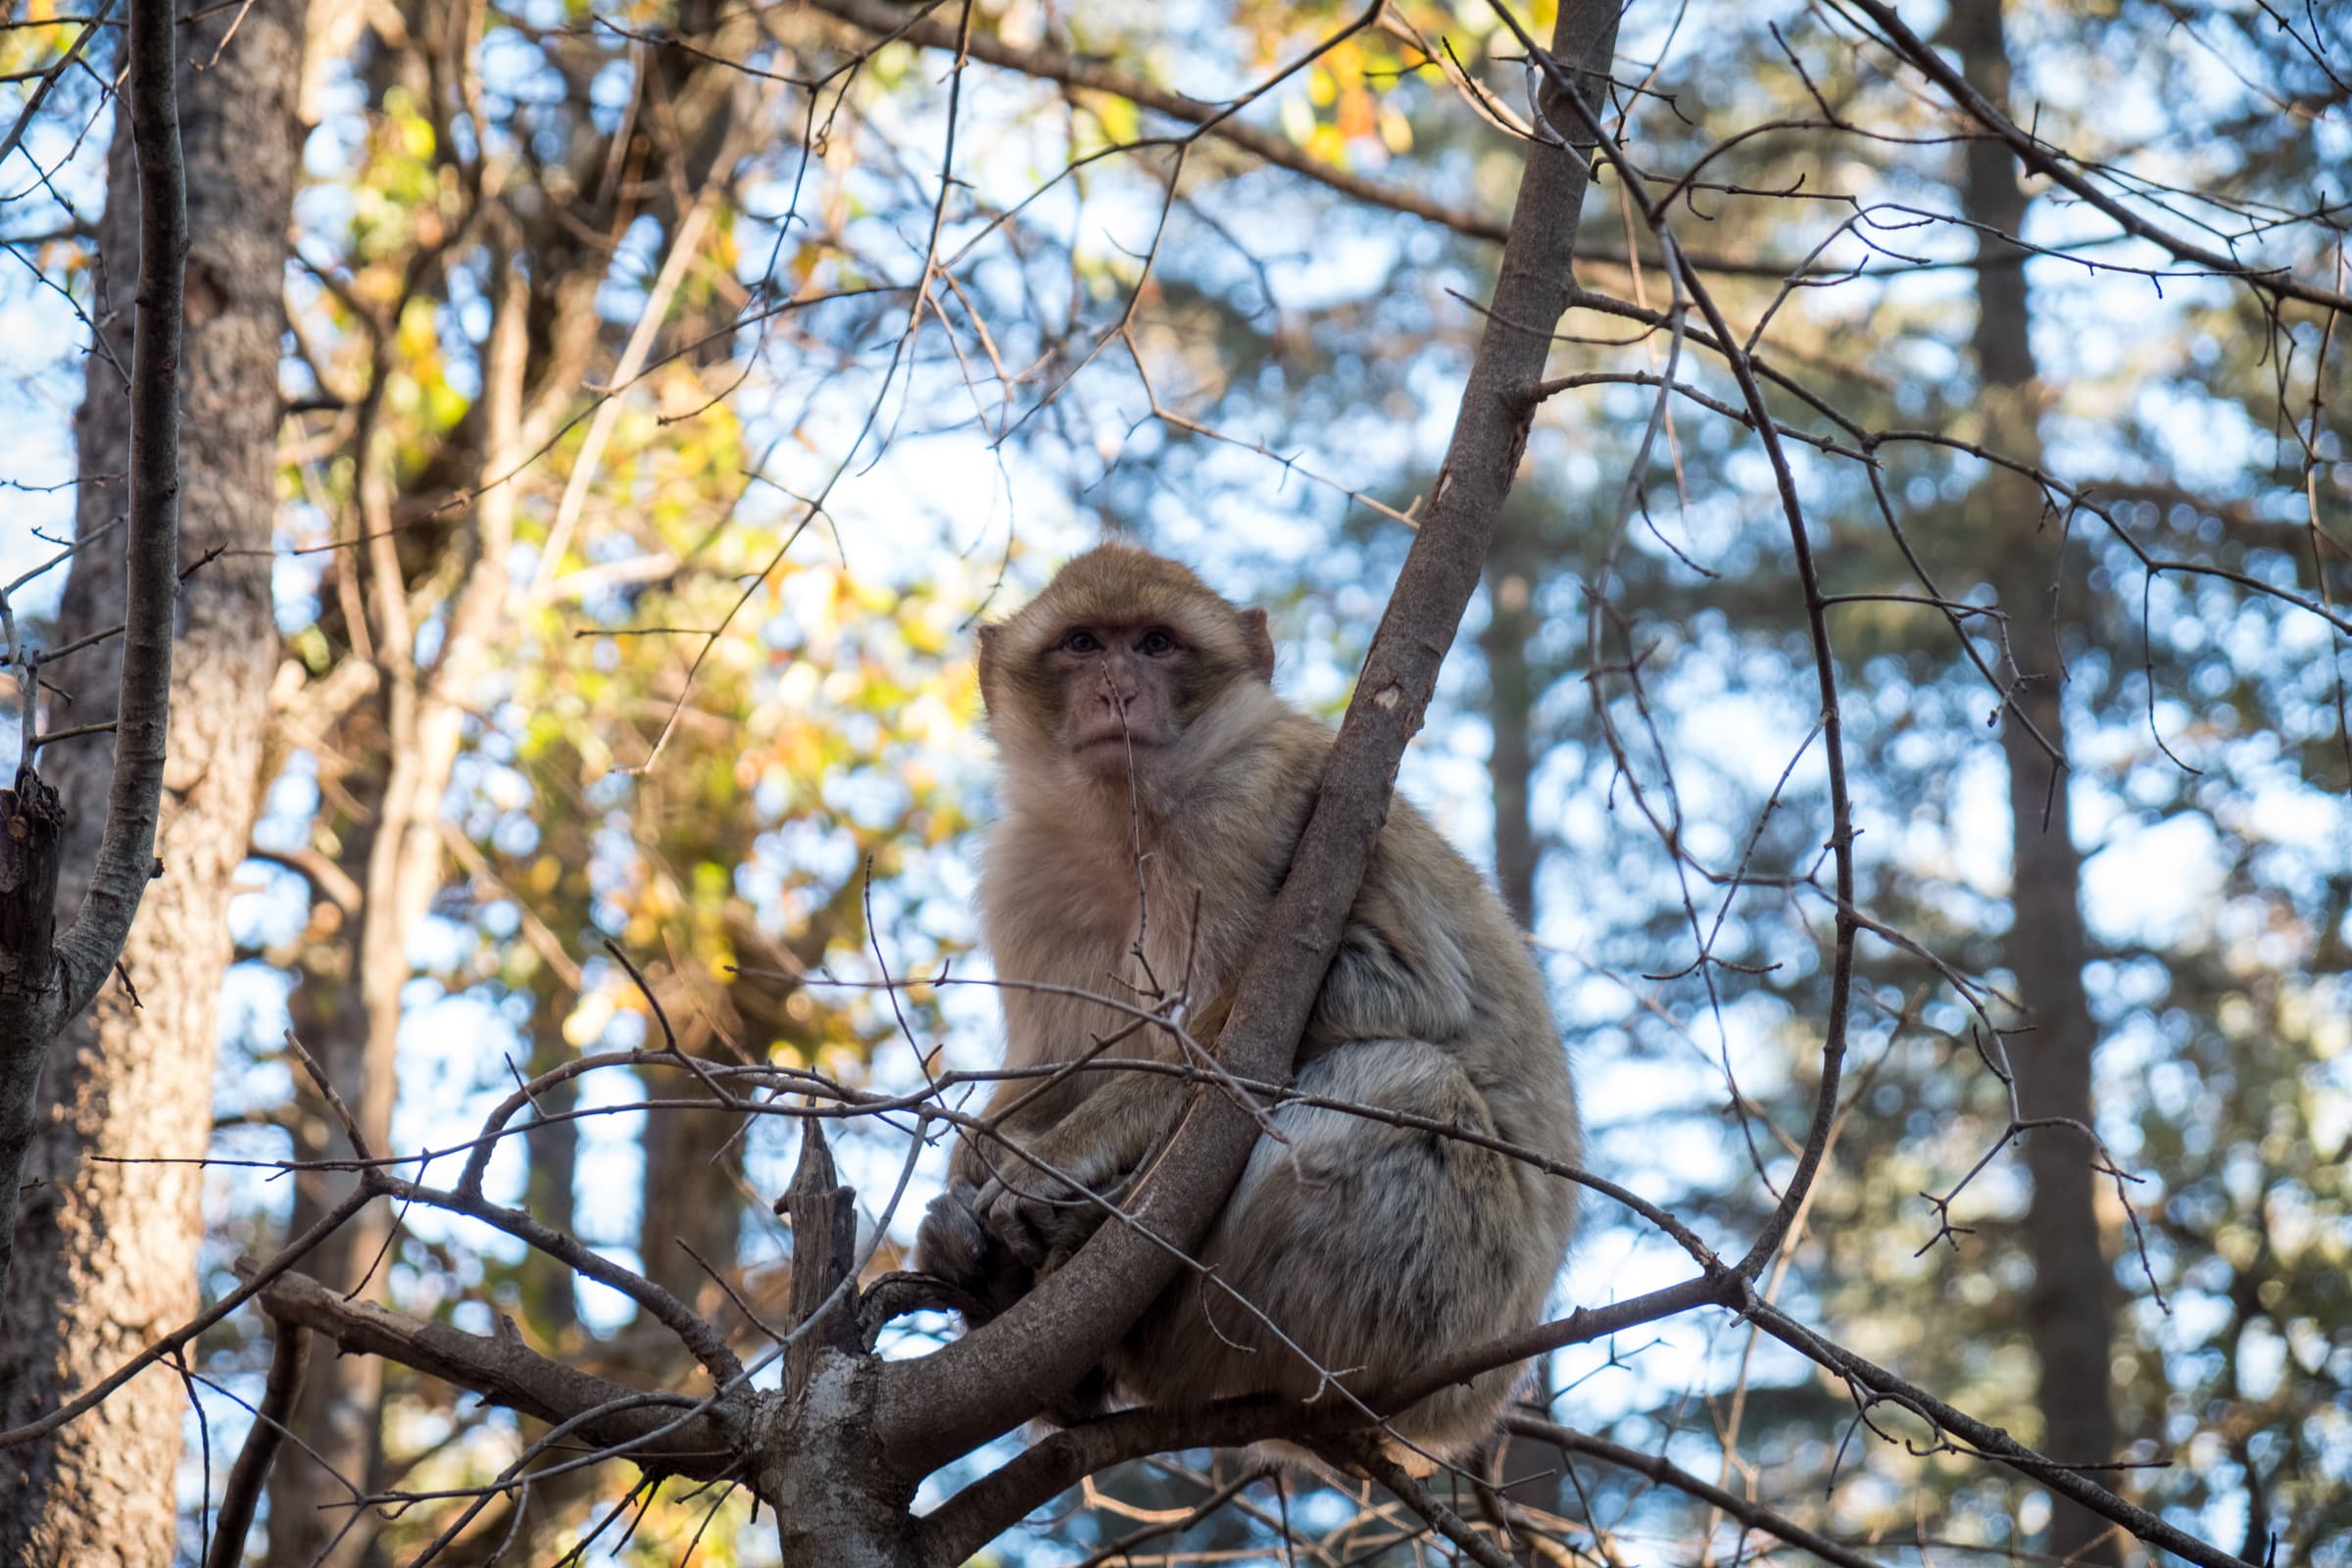 Monkey in a tree in Ifrane, Morocco